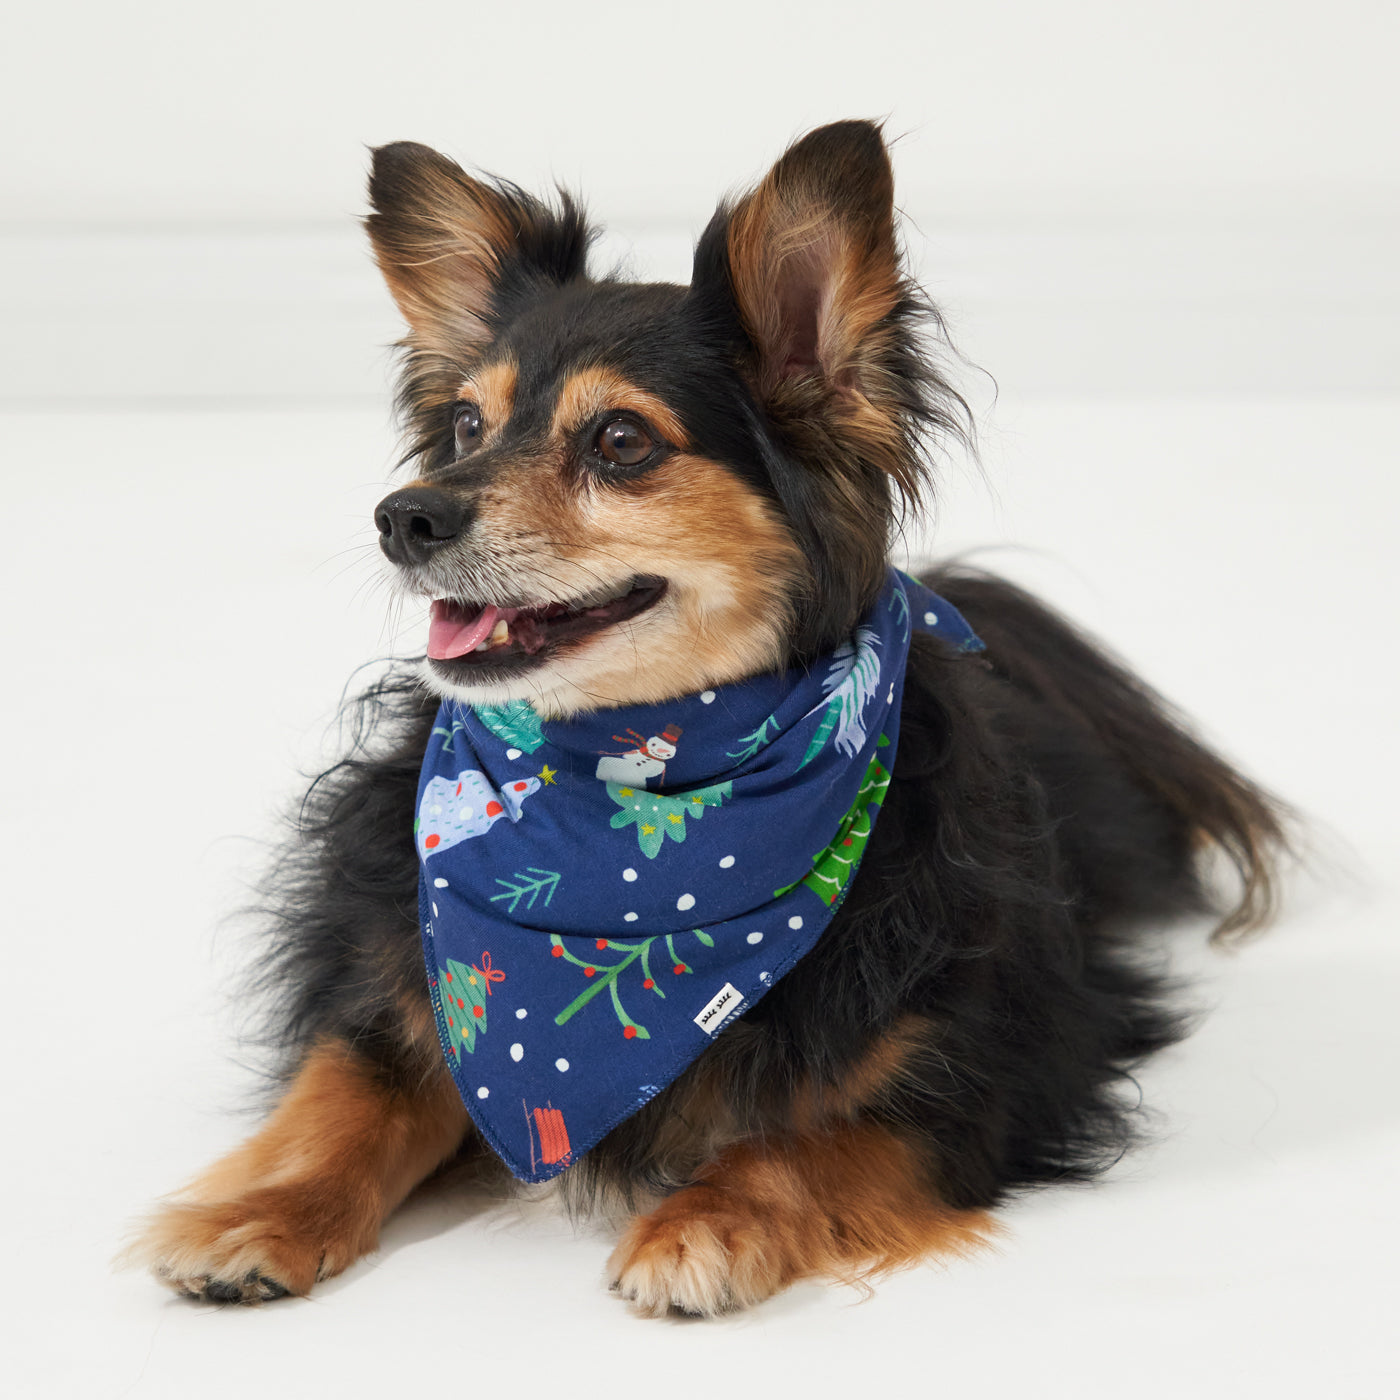 Small dog posing wearing a Blue Merry and Bright pet bandana